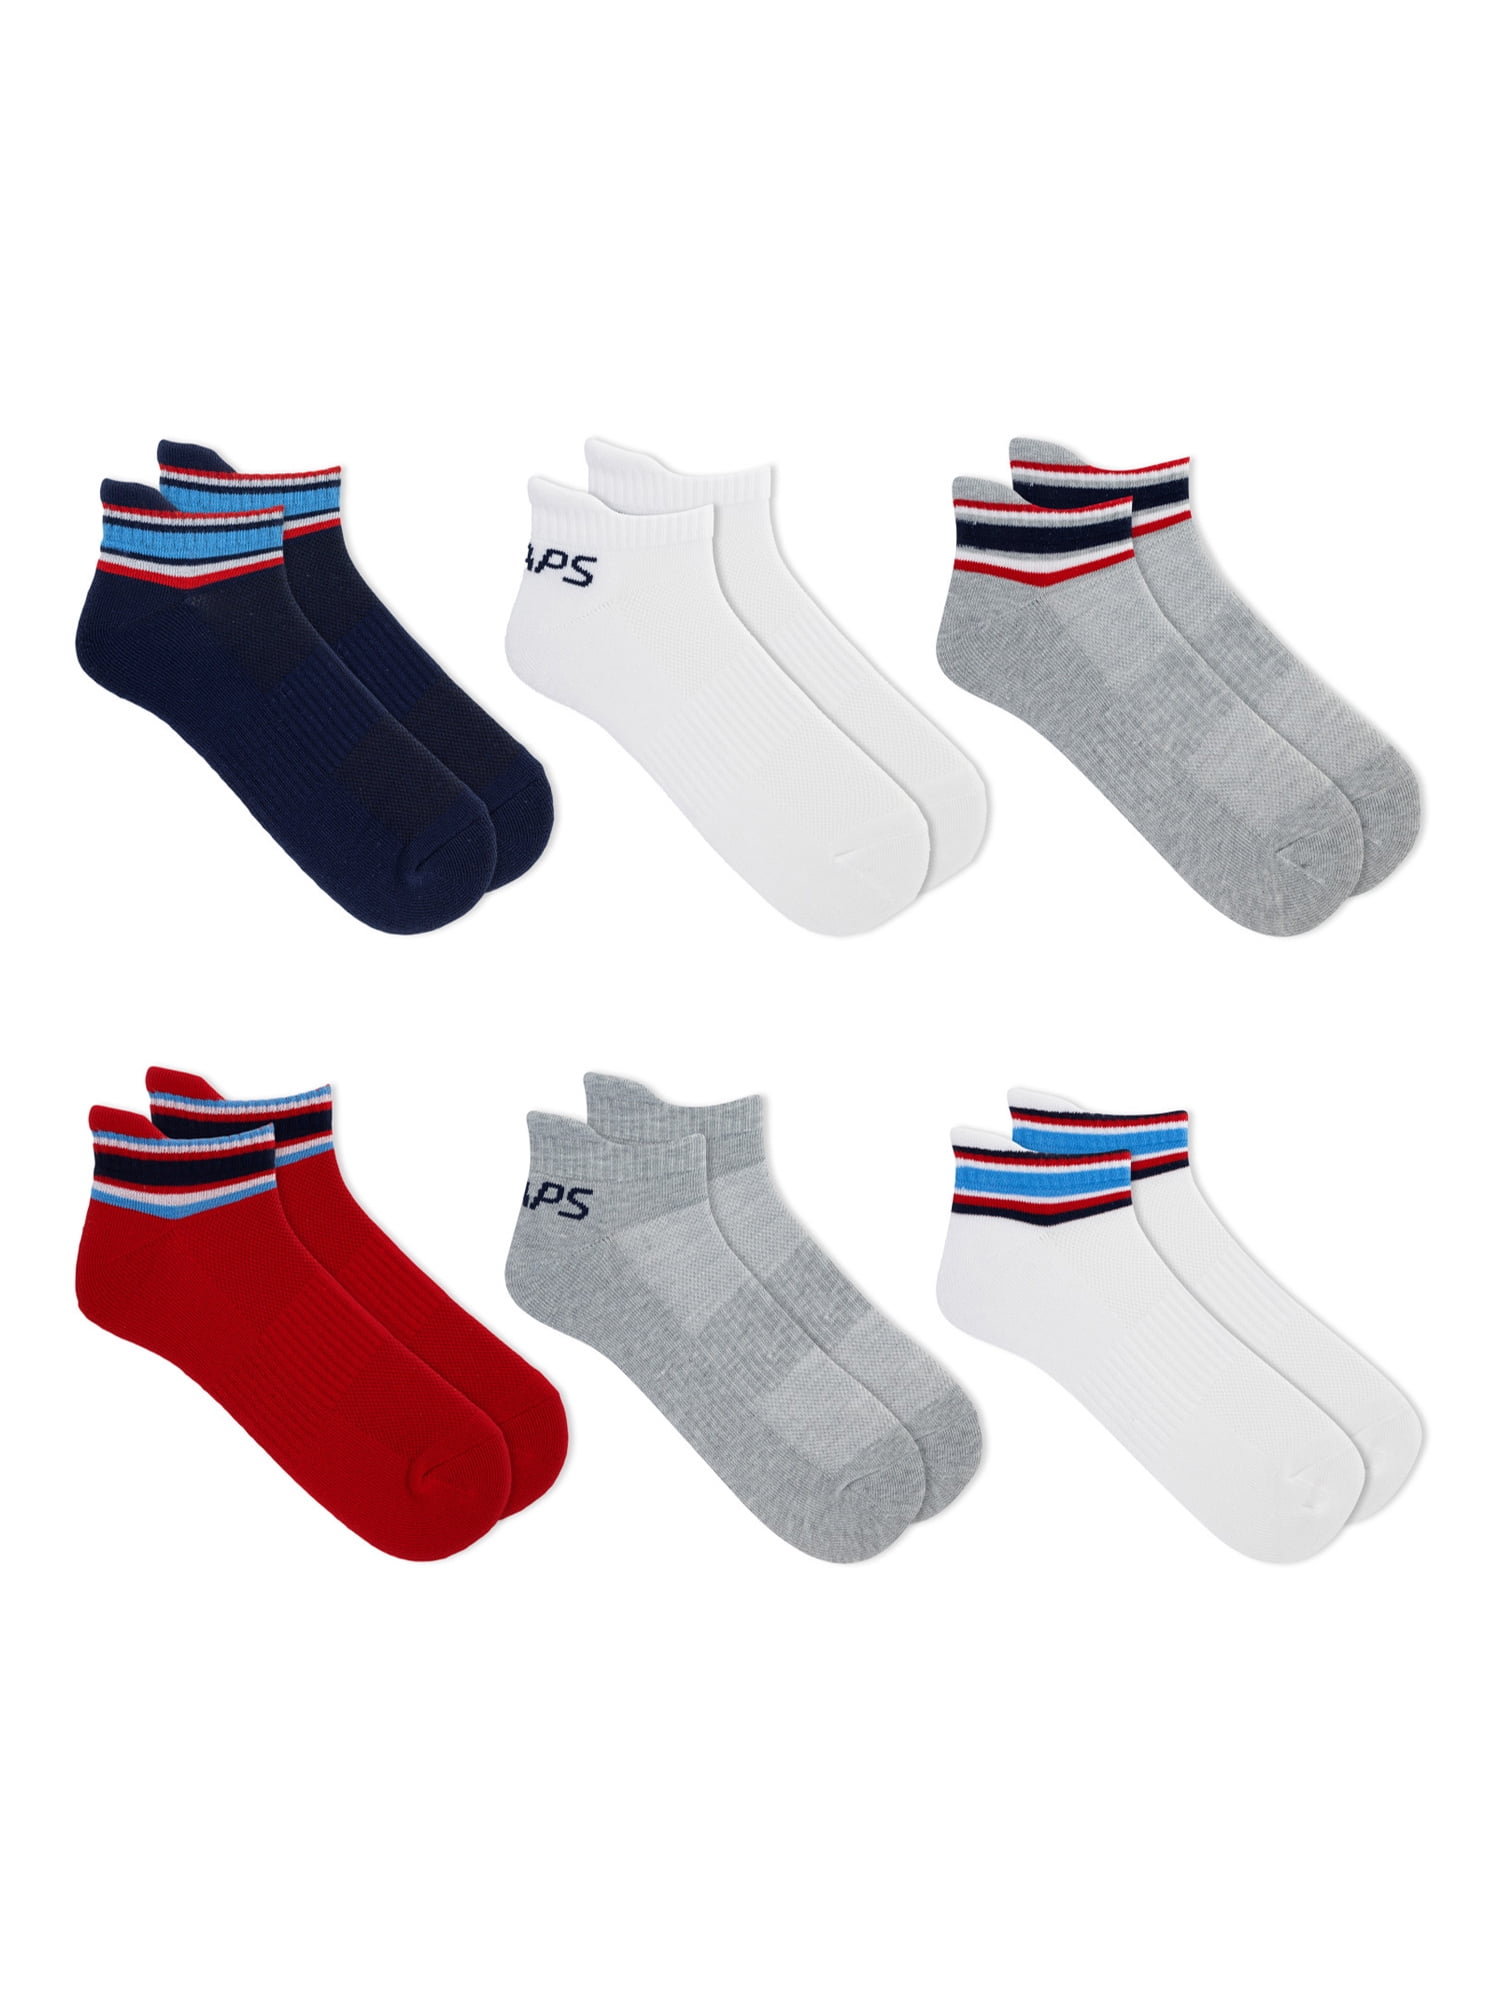 Chaps Sport Men's Camoflage Low Cut Socks 6-Pair Pack - Walmart.com